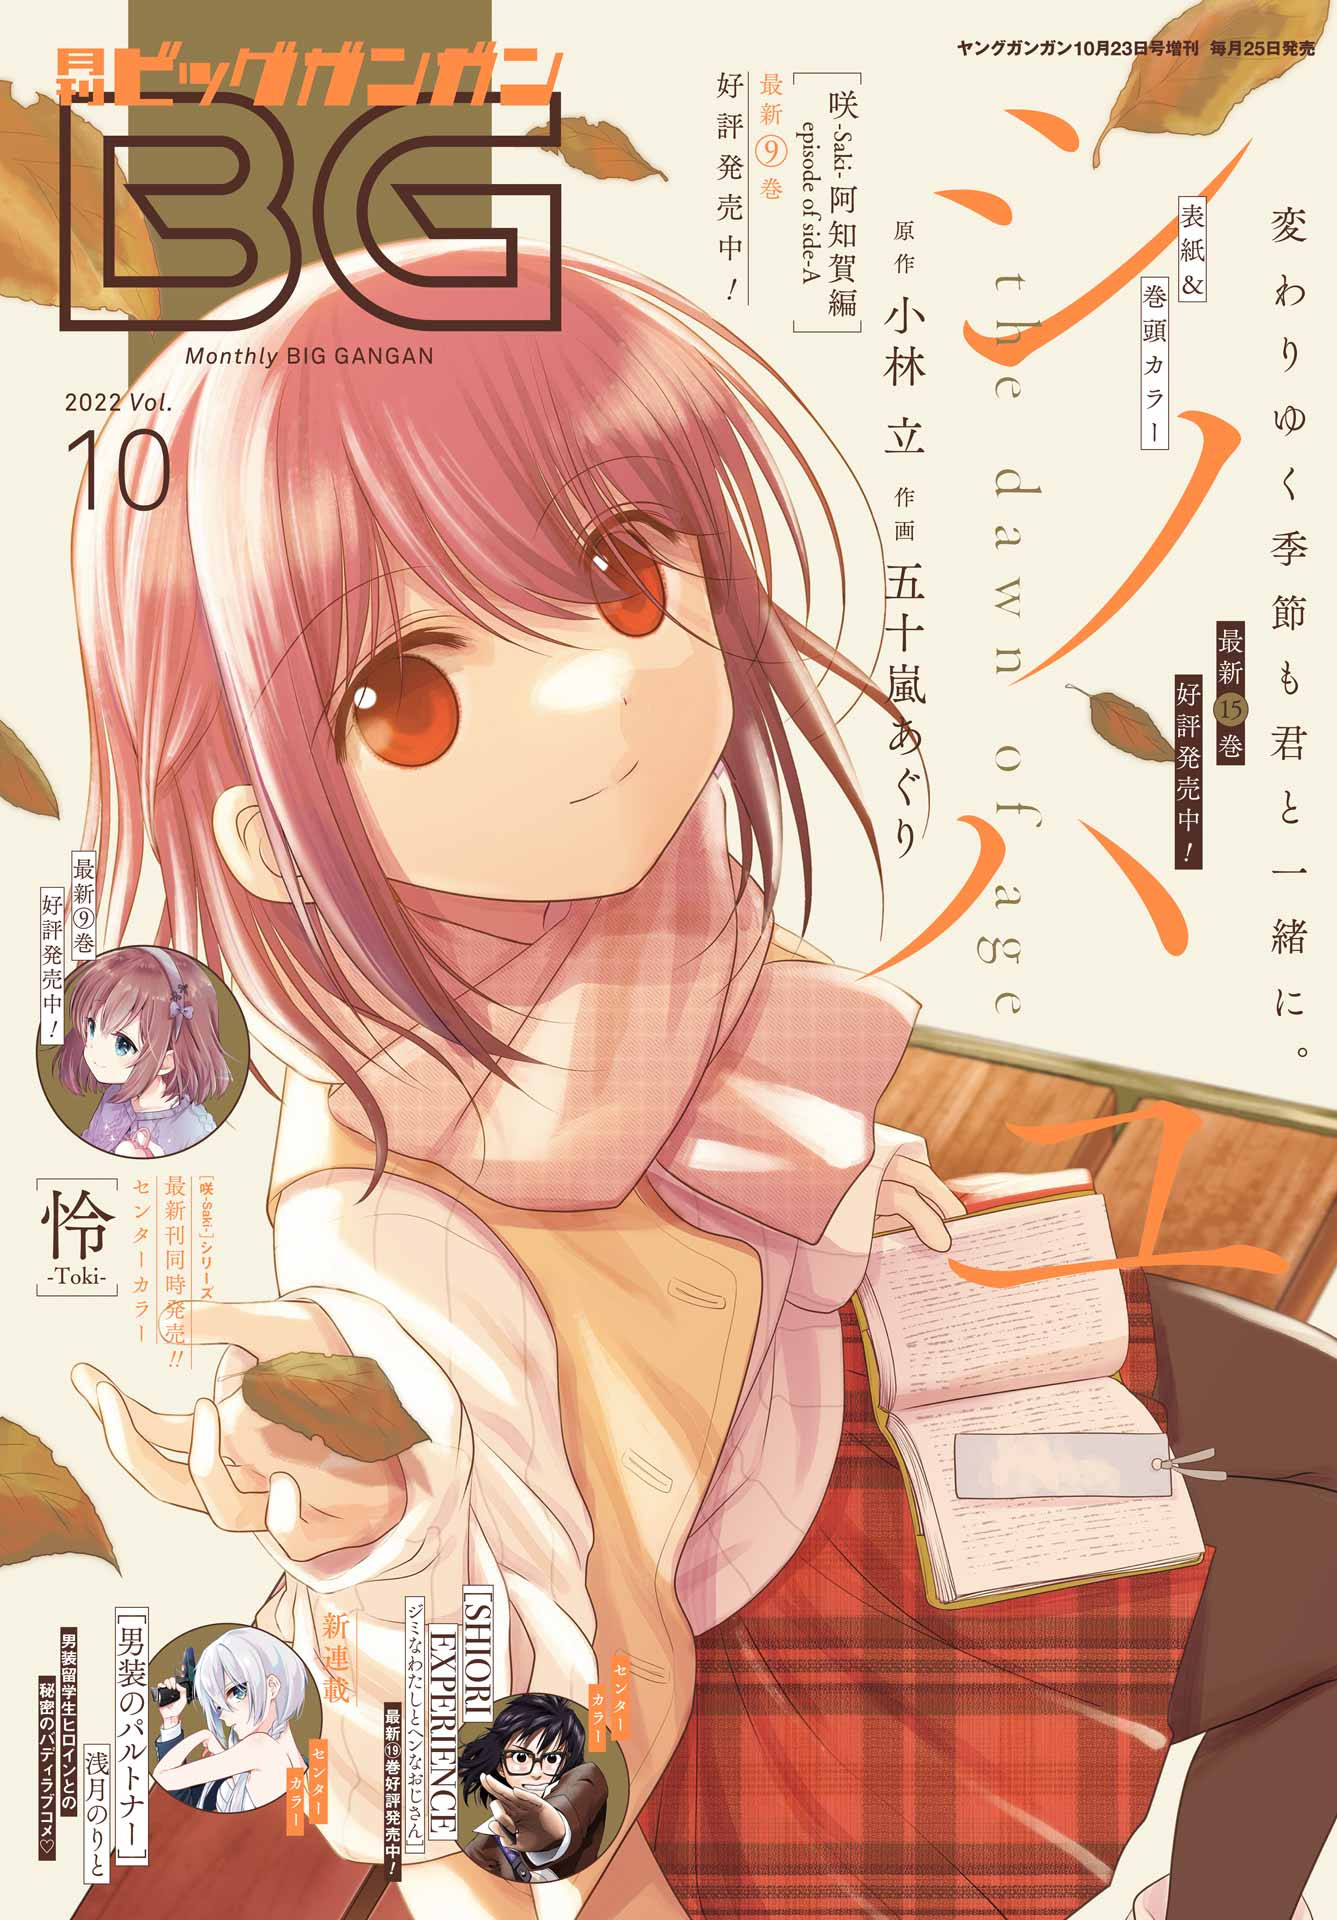 Shinohayu - The Dawn of Age Manga - Chapter 098 - Page 1